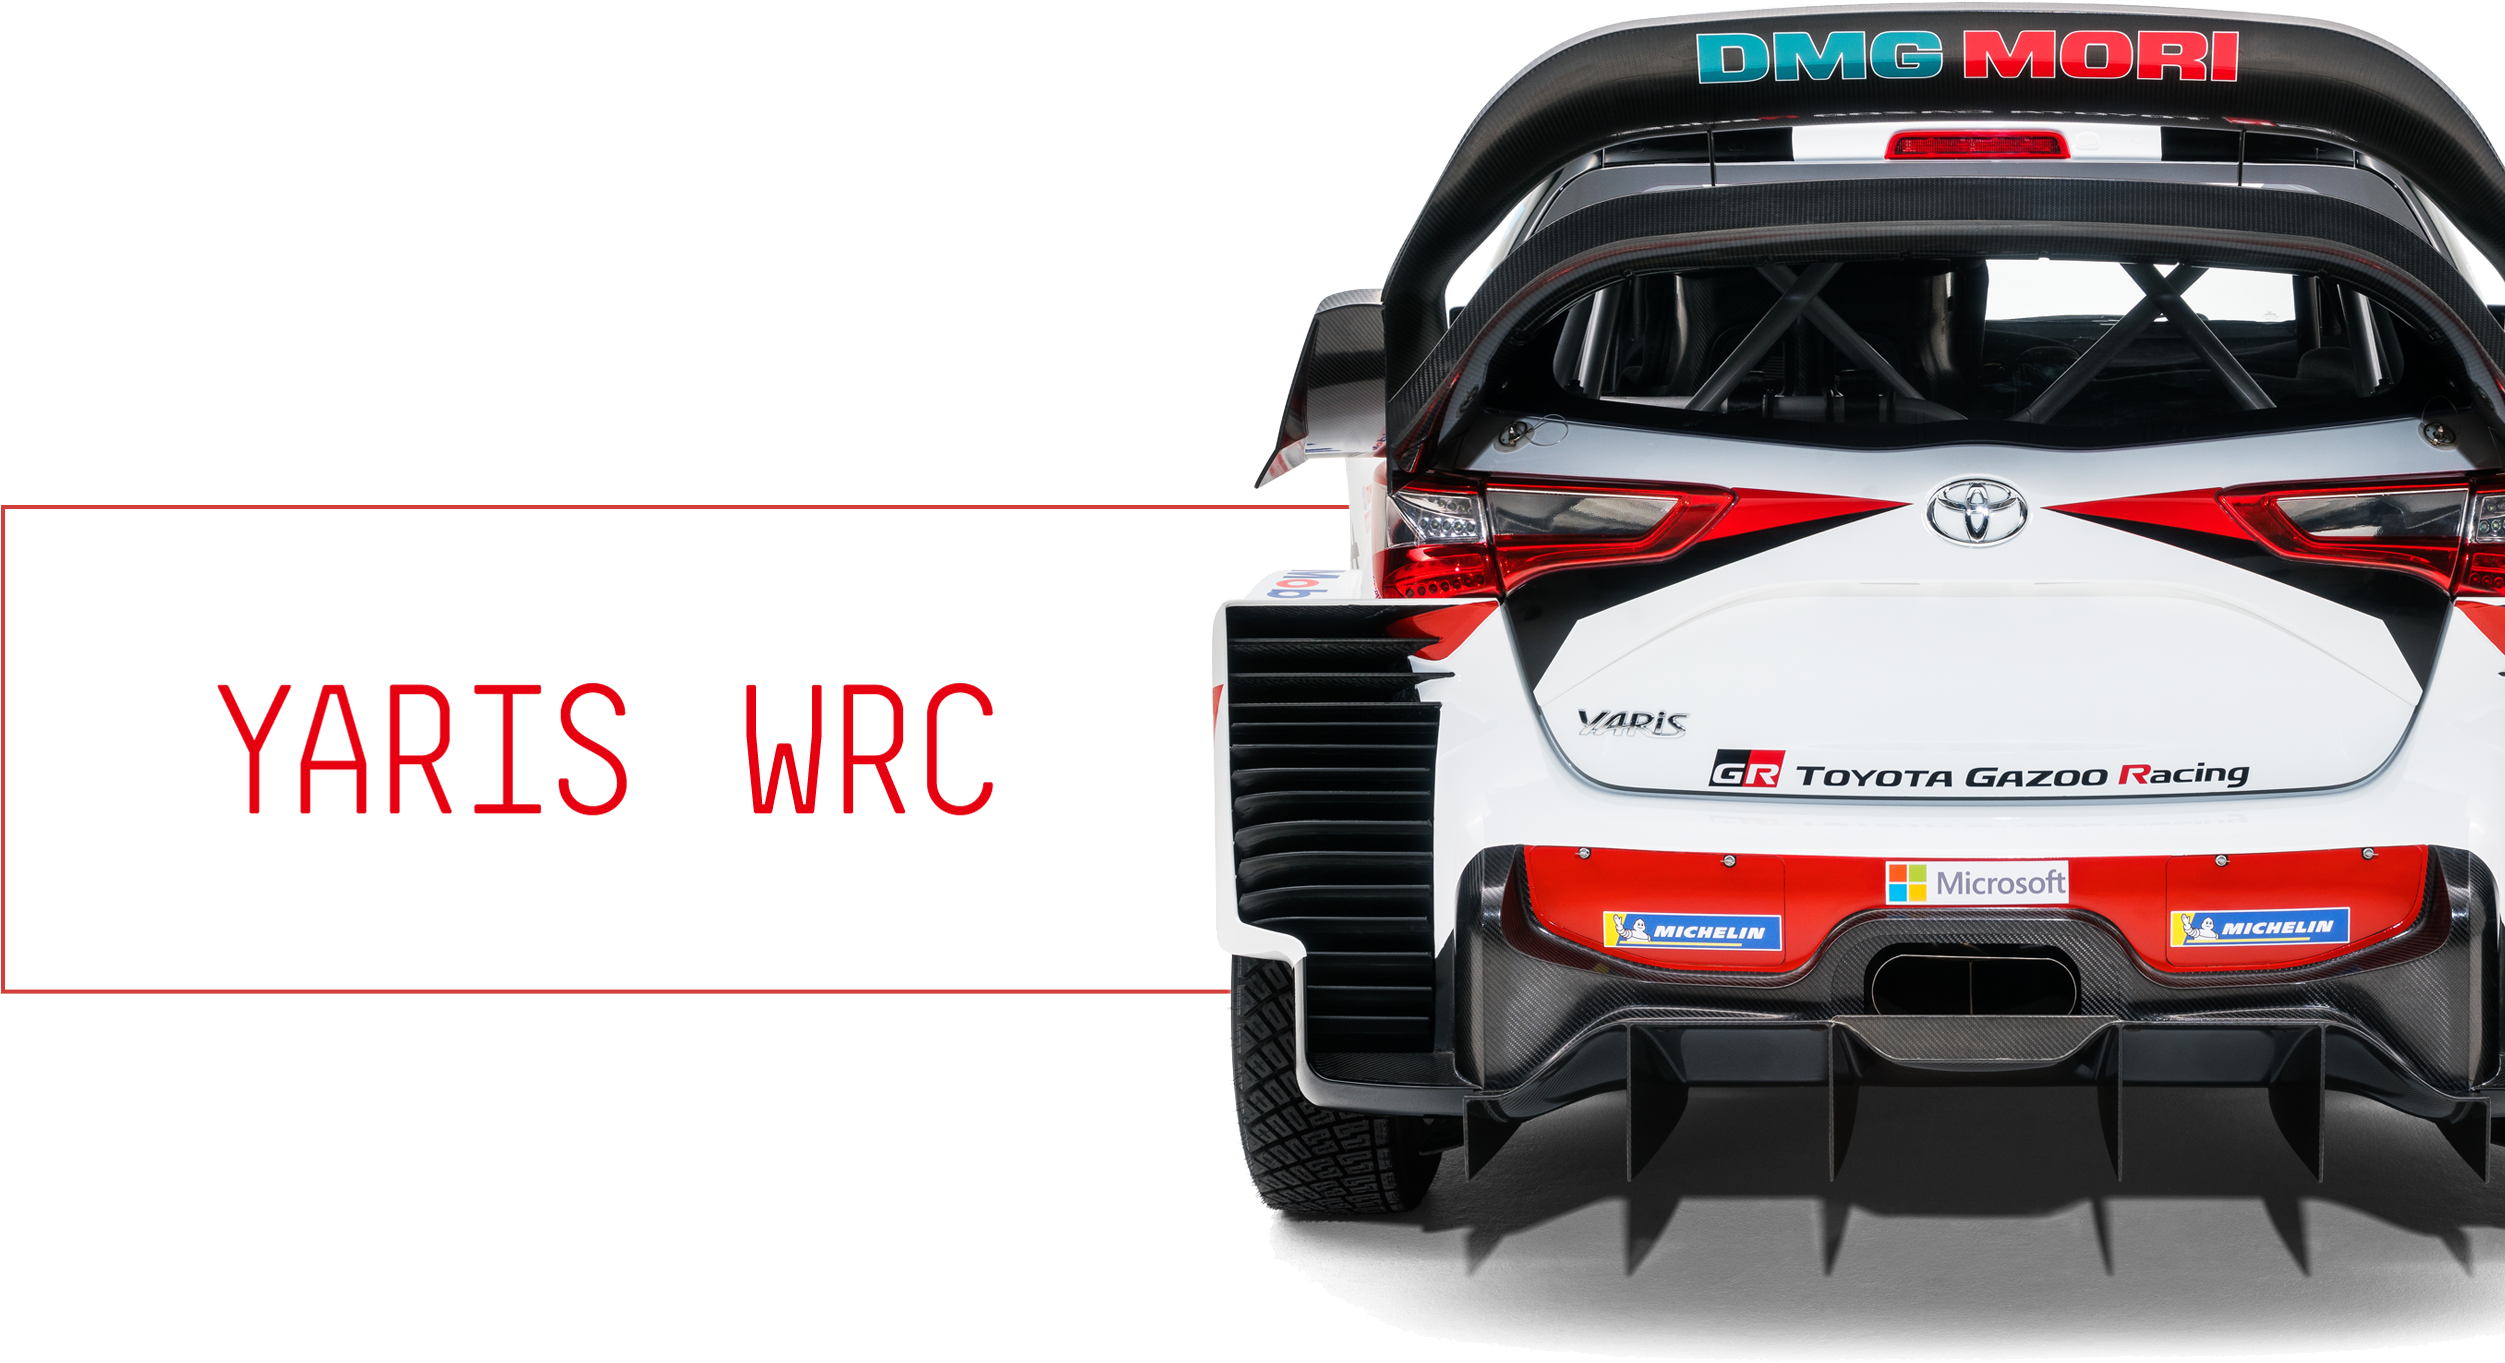 Toyota Yaris W R C Rally Car Rear View